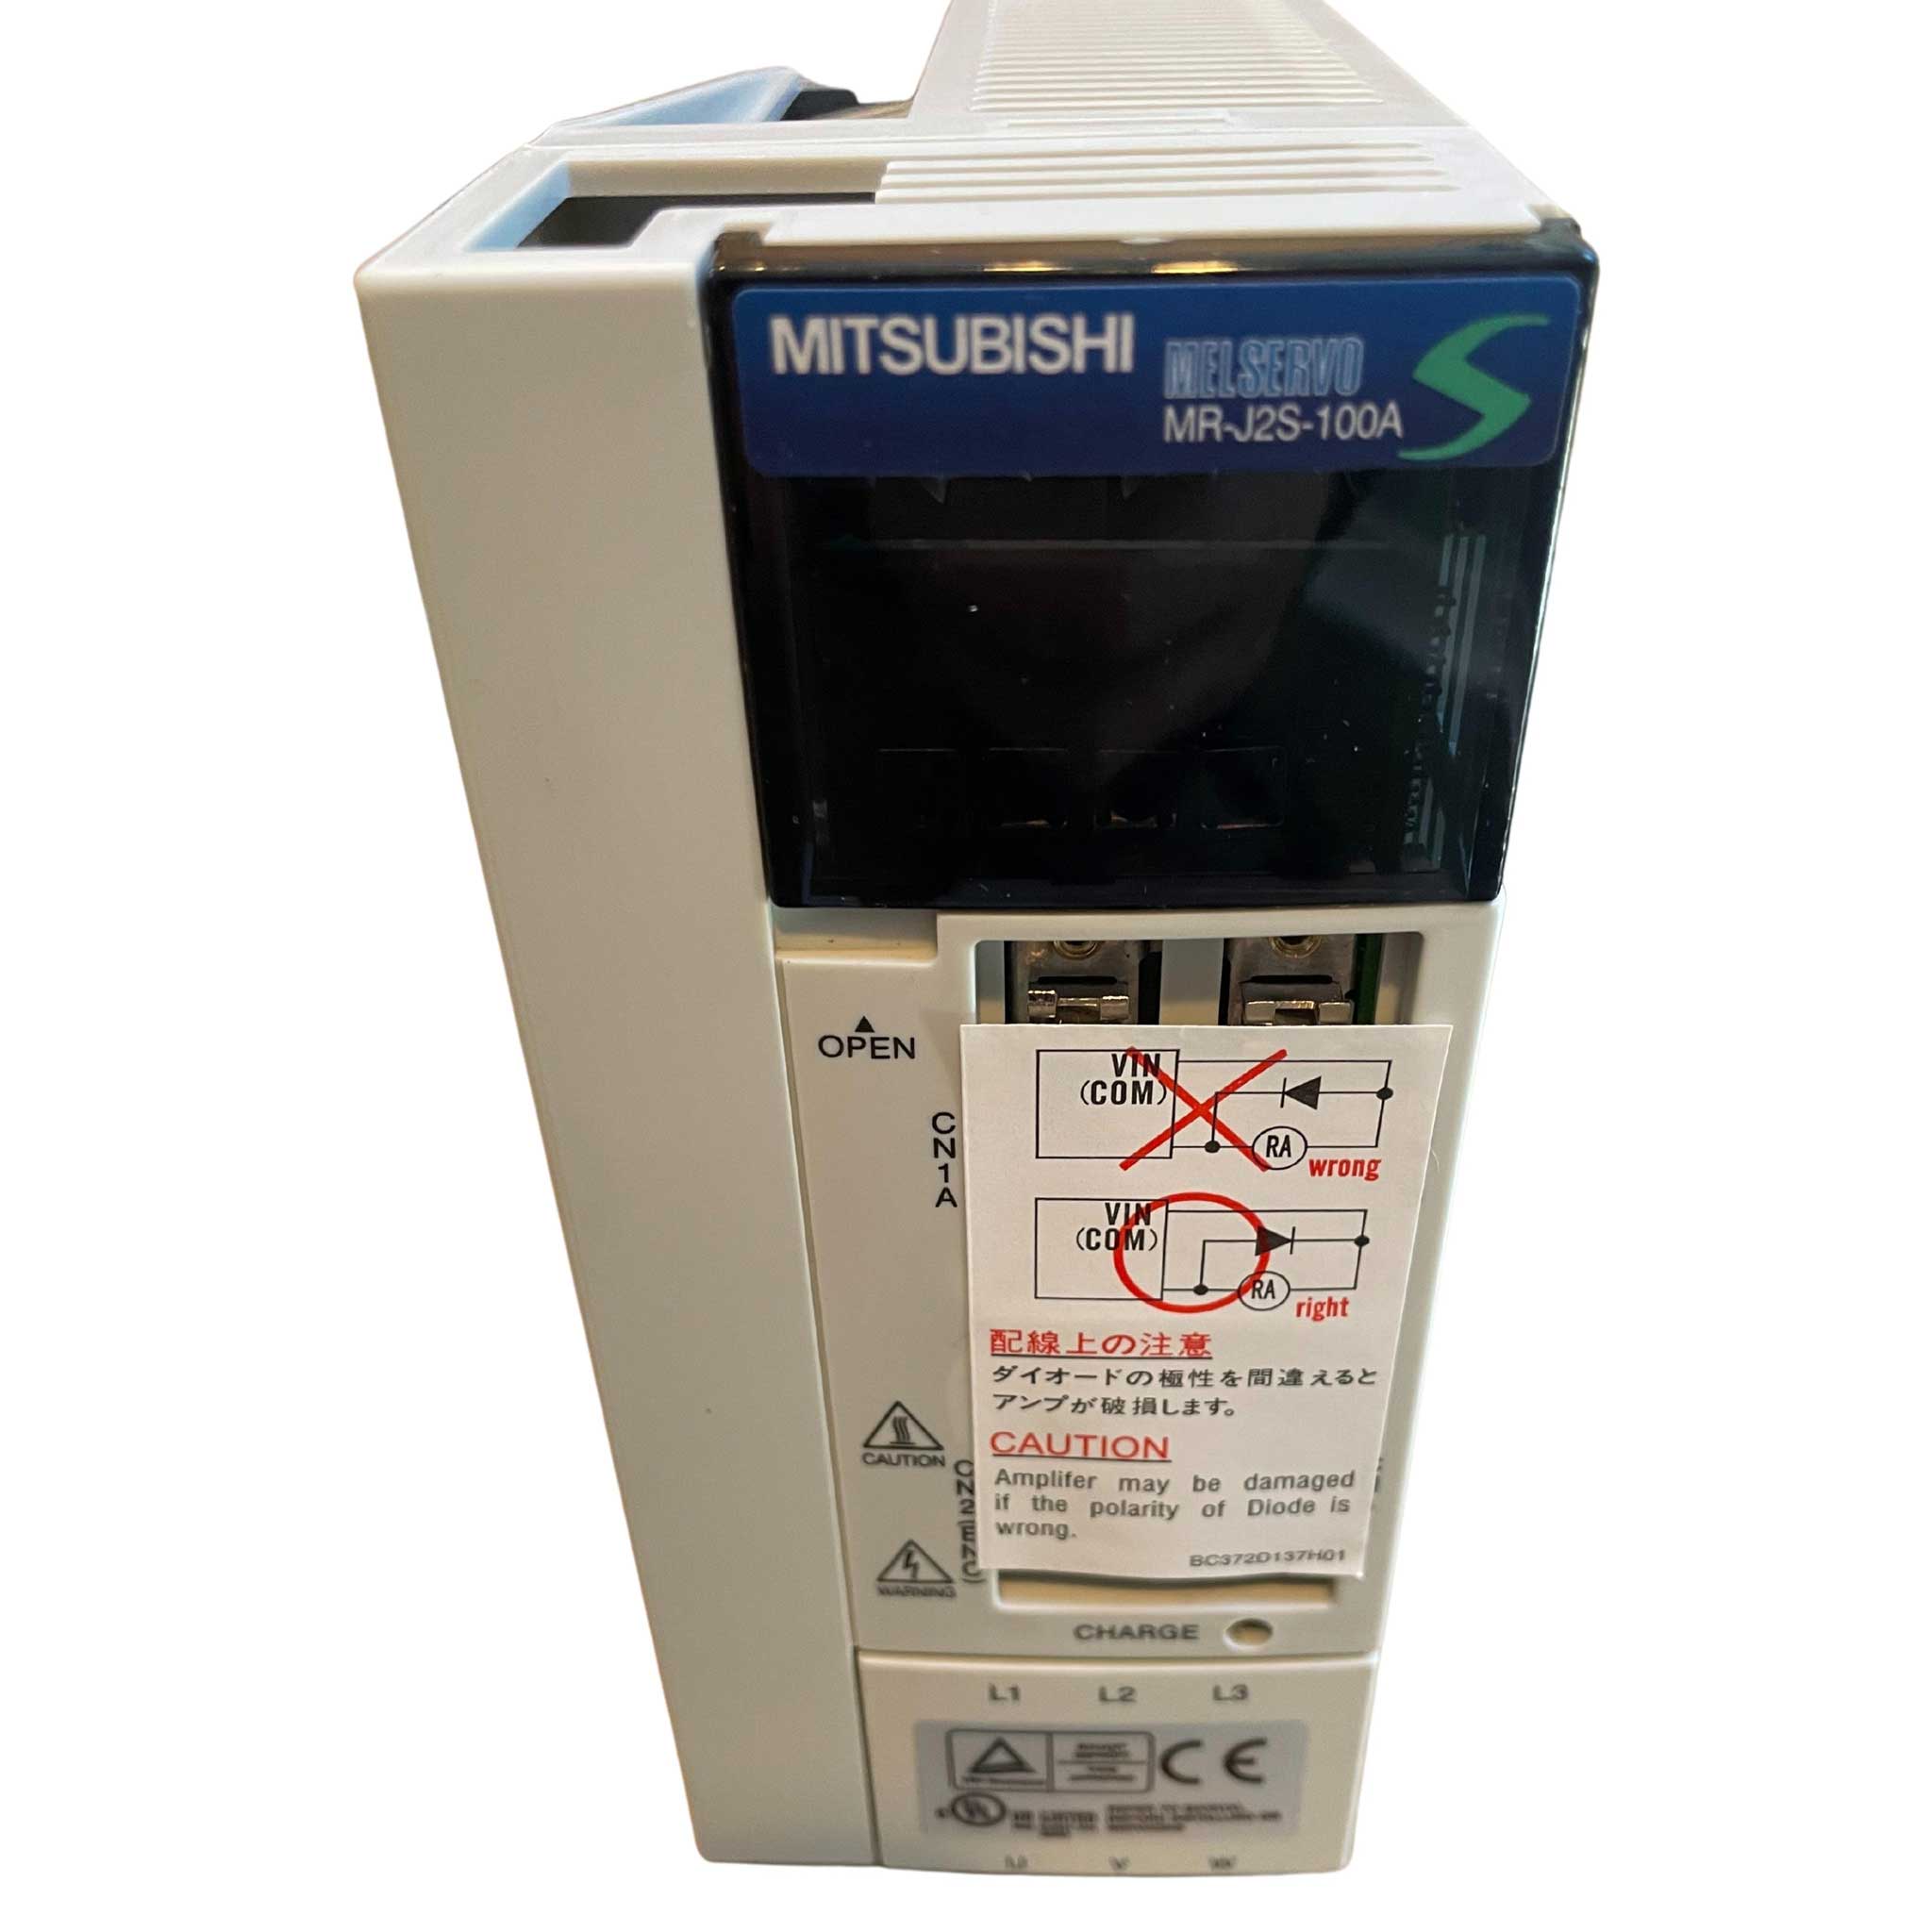 Mitsubishi Servo Amplifier Type MR-J2S-100A